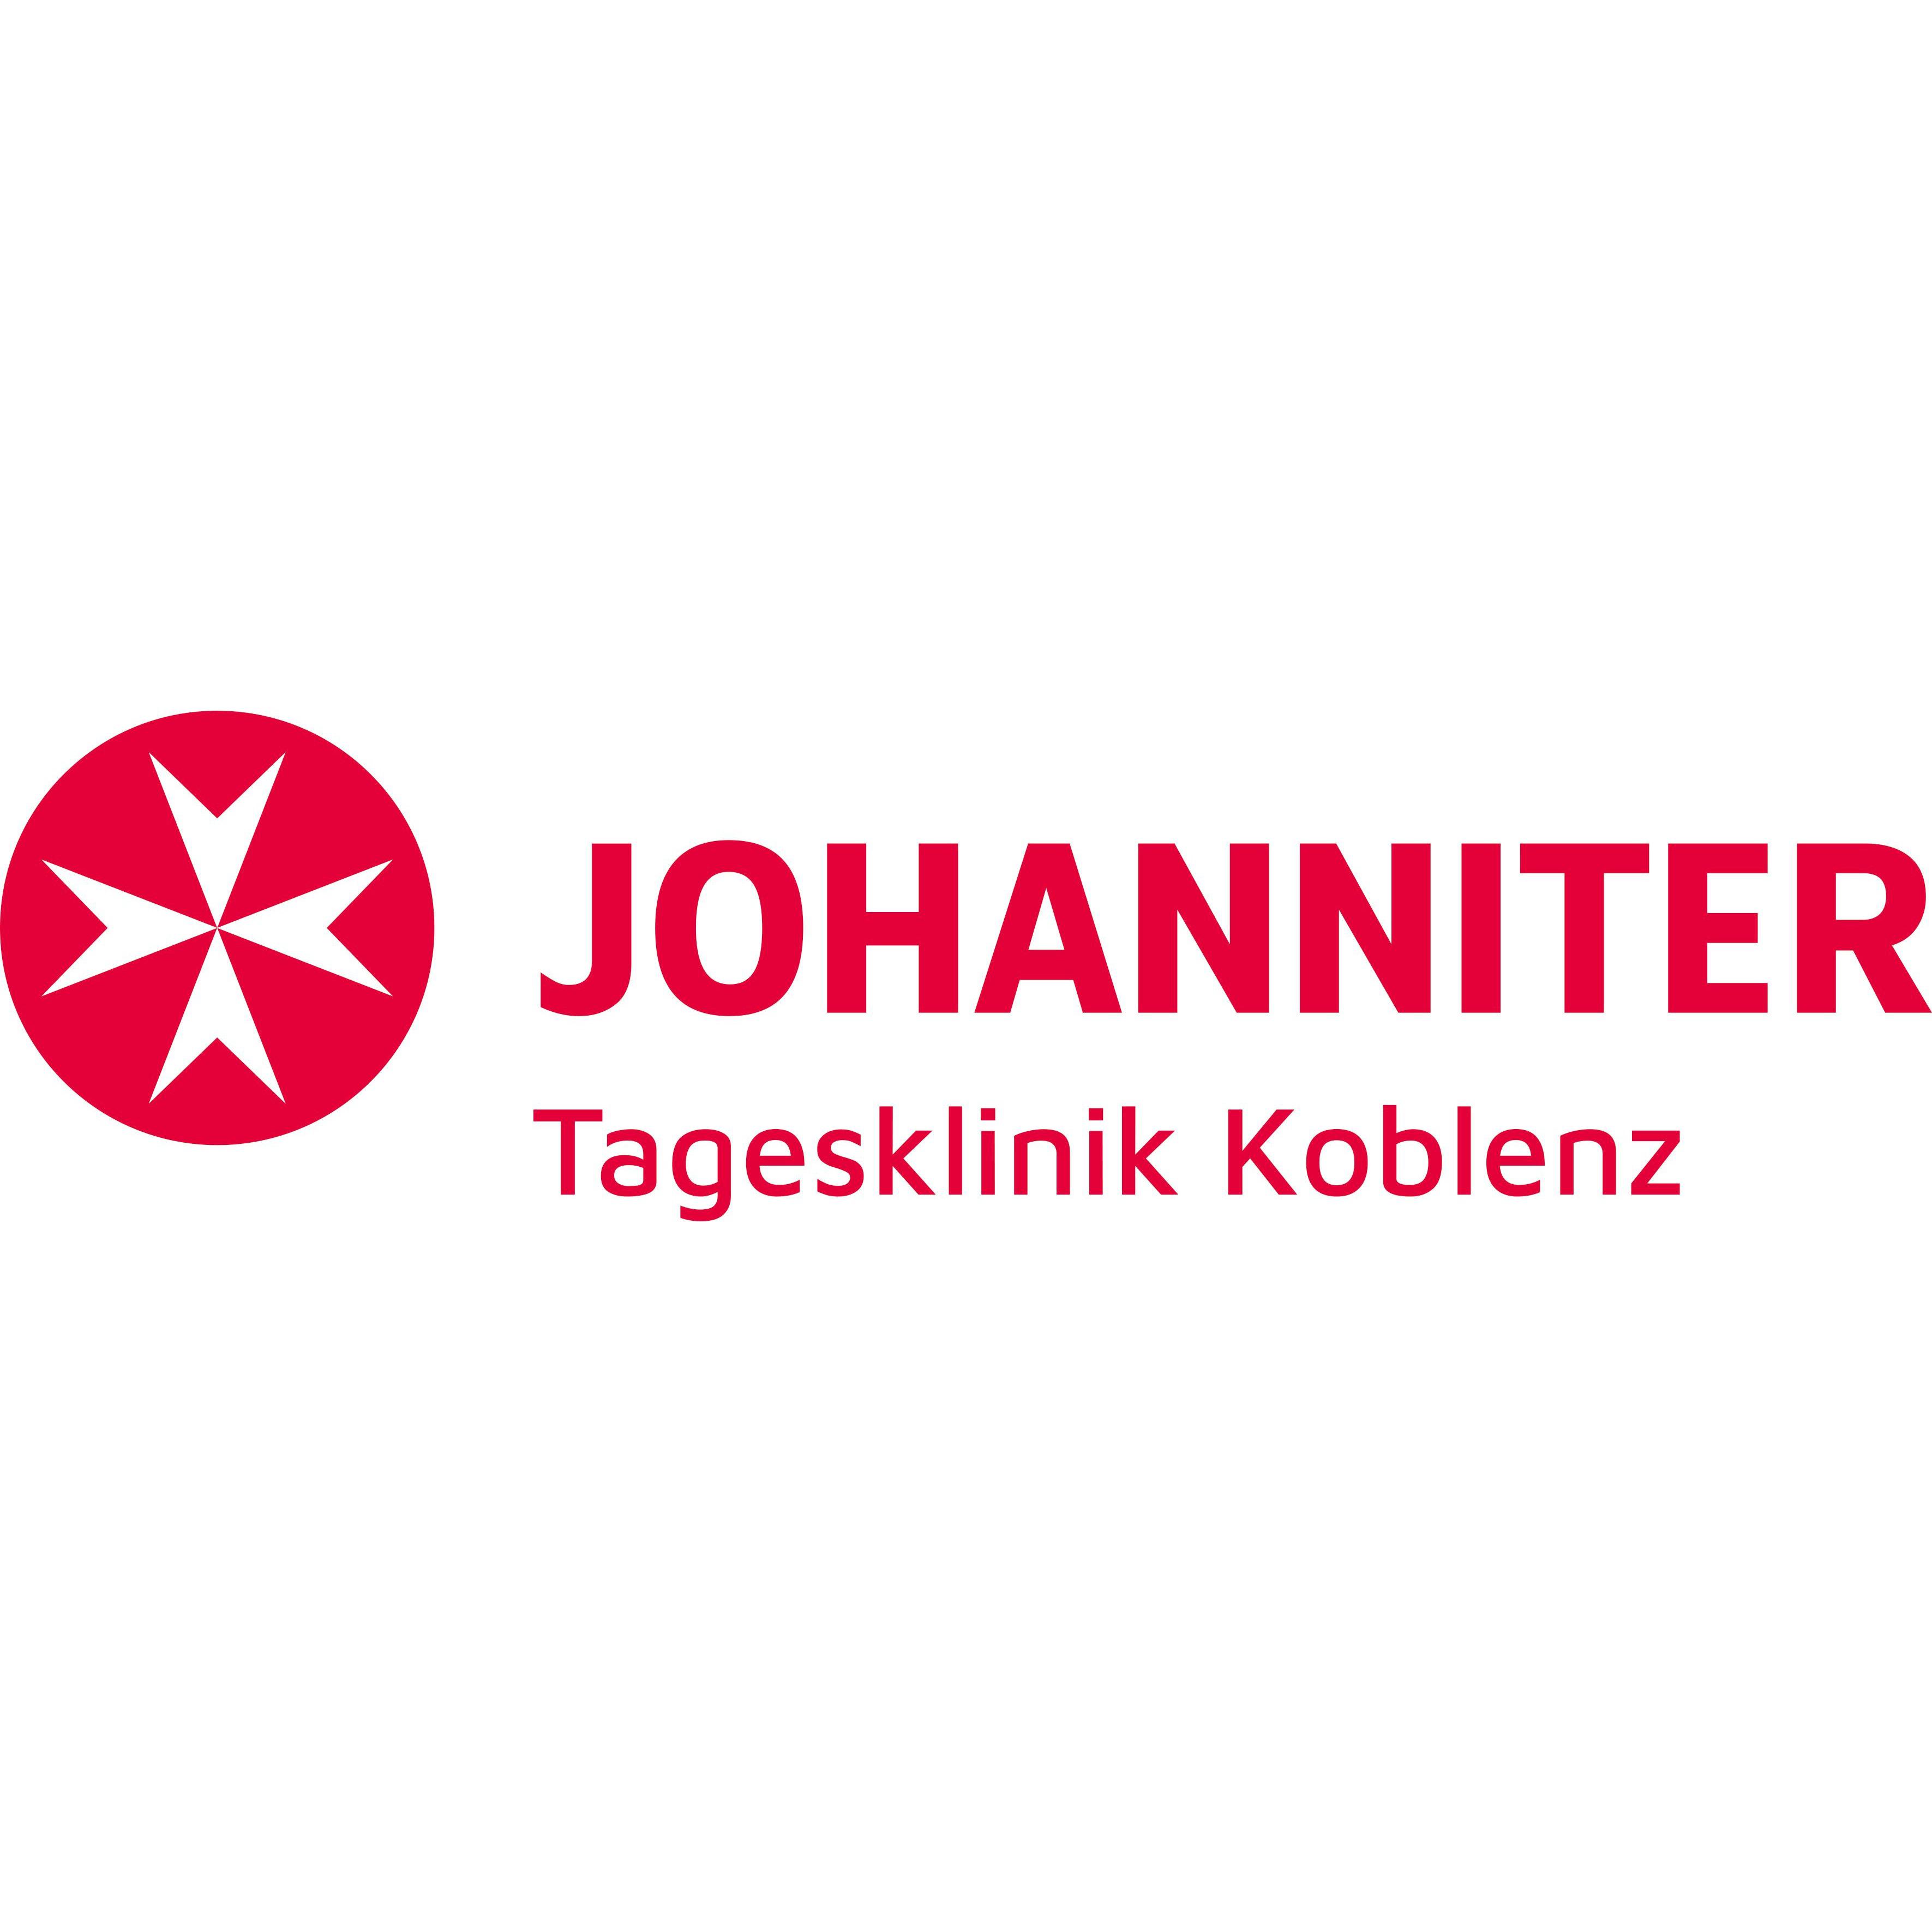 Johanniter-Tagesklinik Koblenz GmbH in Koblenz am Rhein - Logo